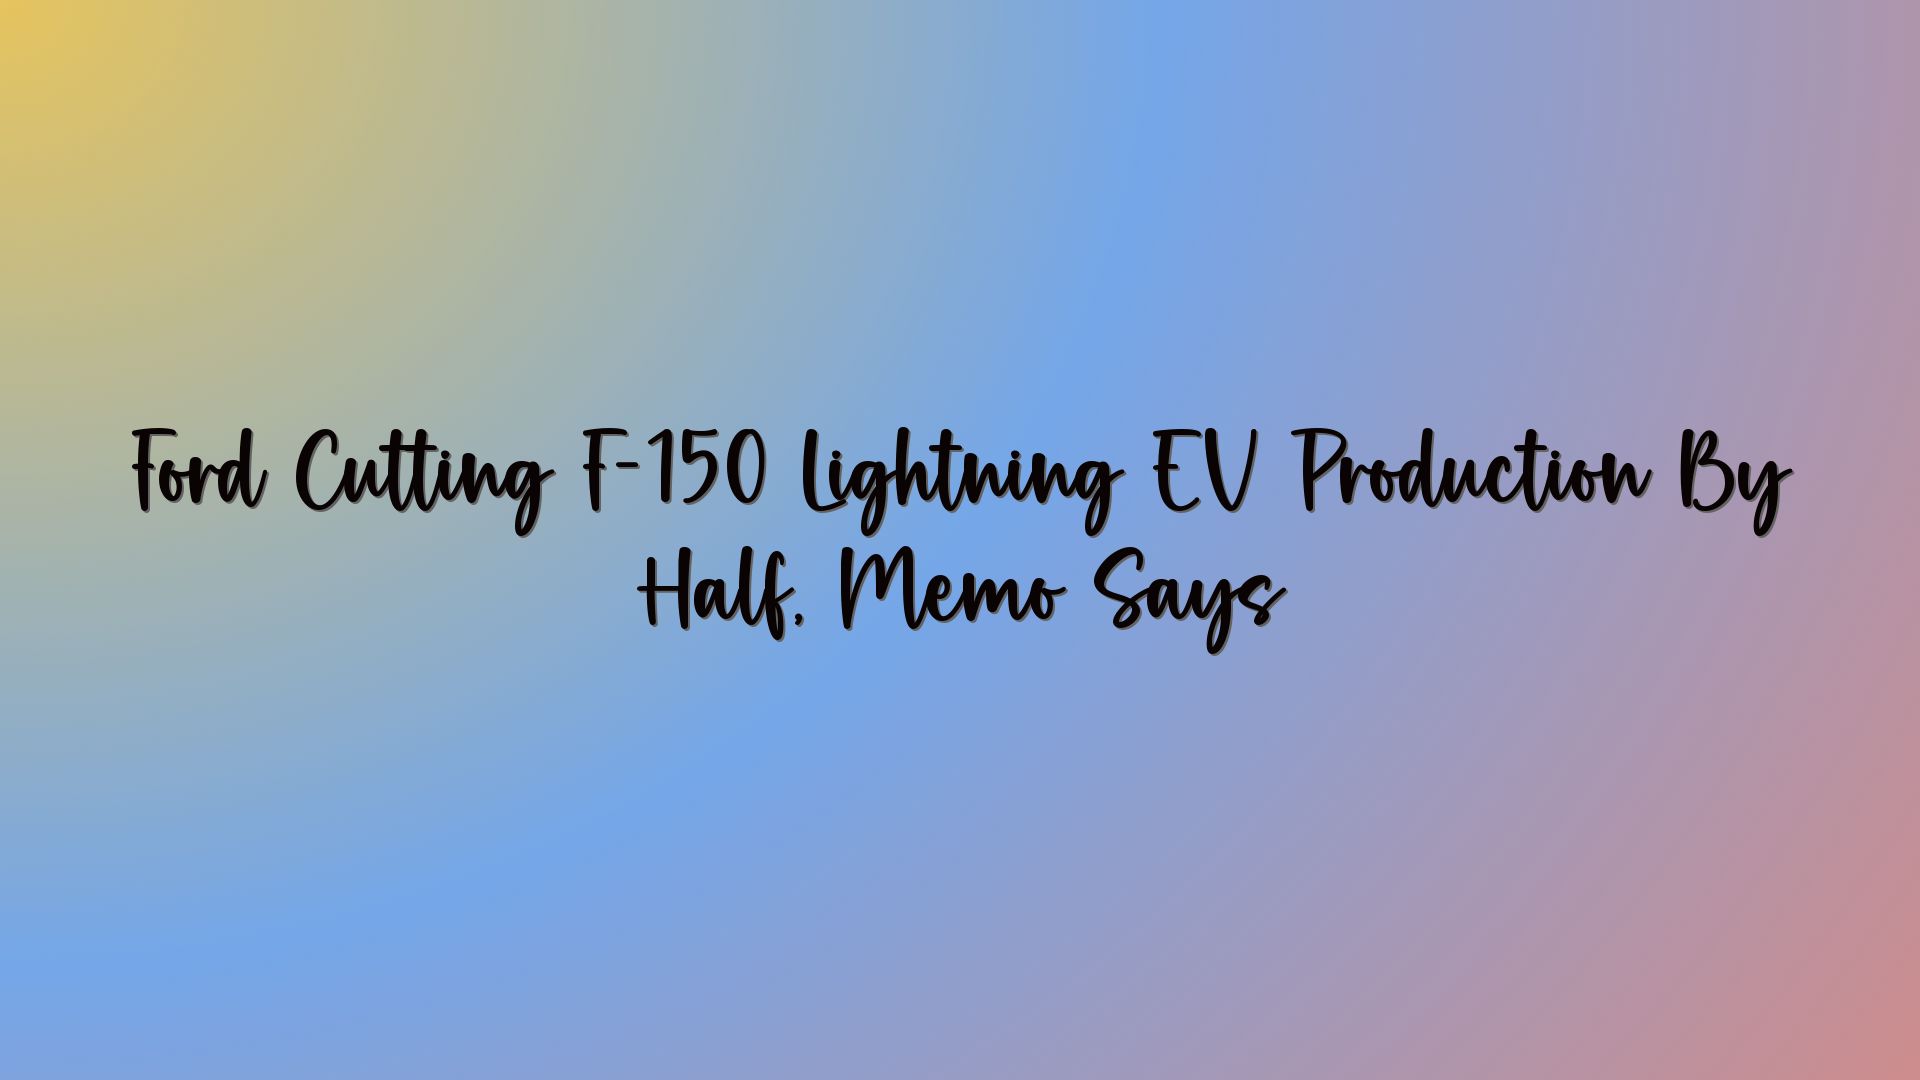 Ford Cutting F-150 Lightning EV Production By Half, Memo Says